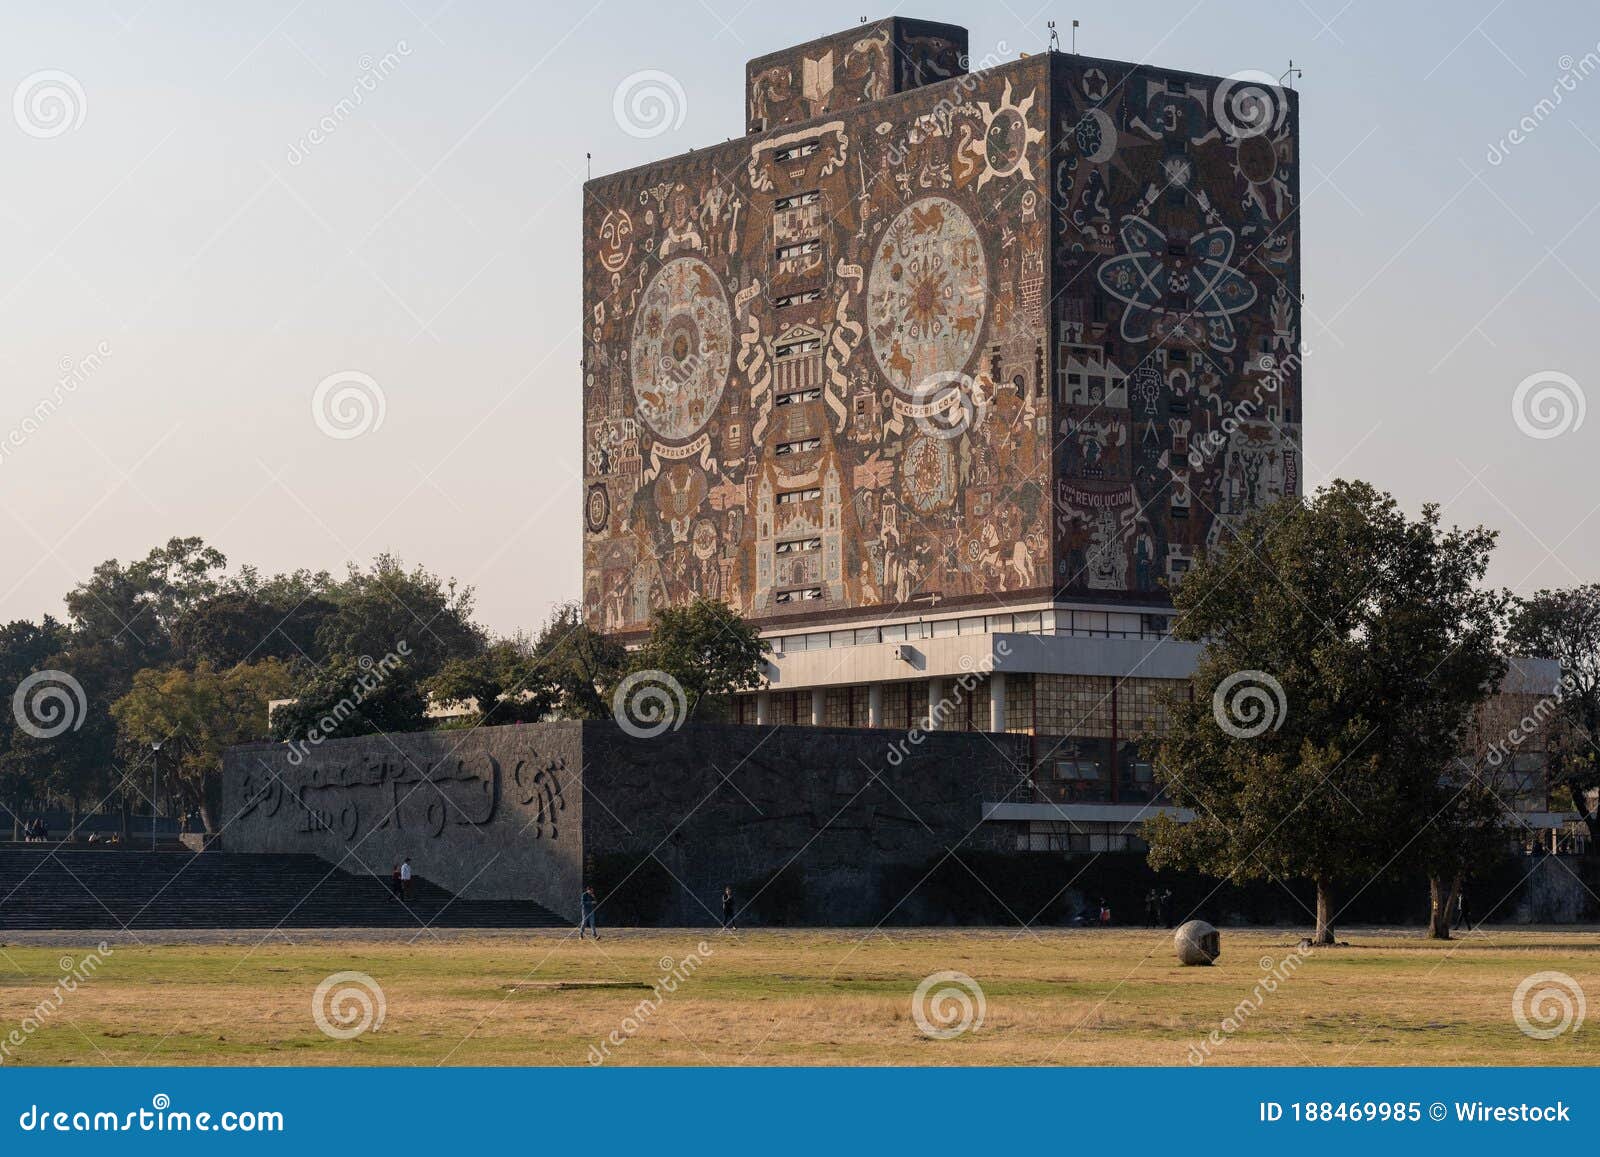 mexico city, mexico - jan 08, 2020: central library of unam (national autonomous university of mexico